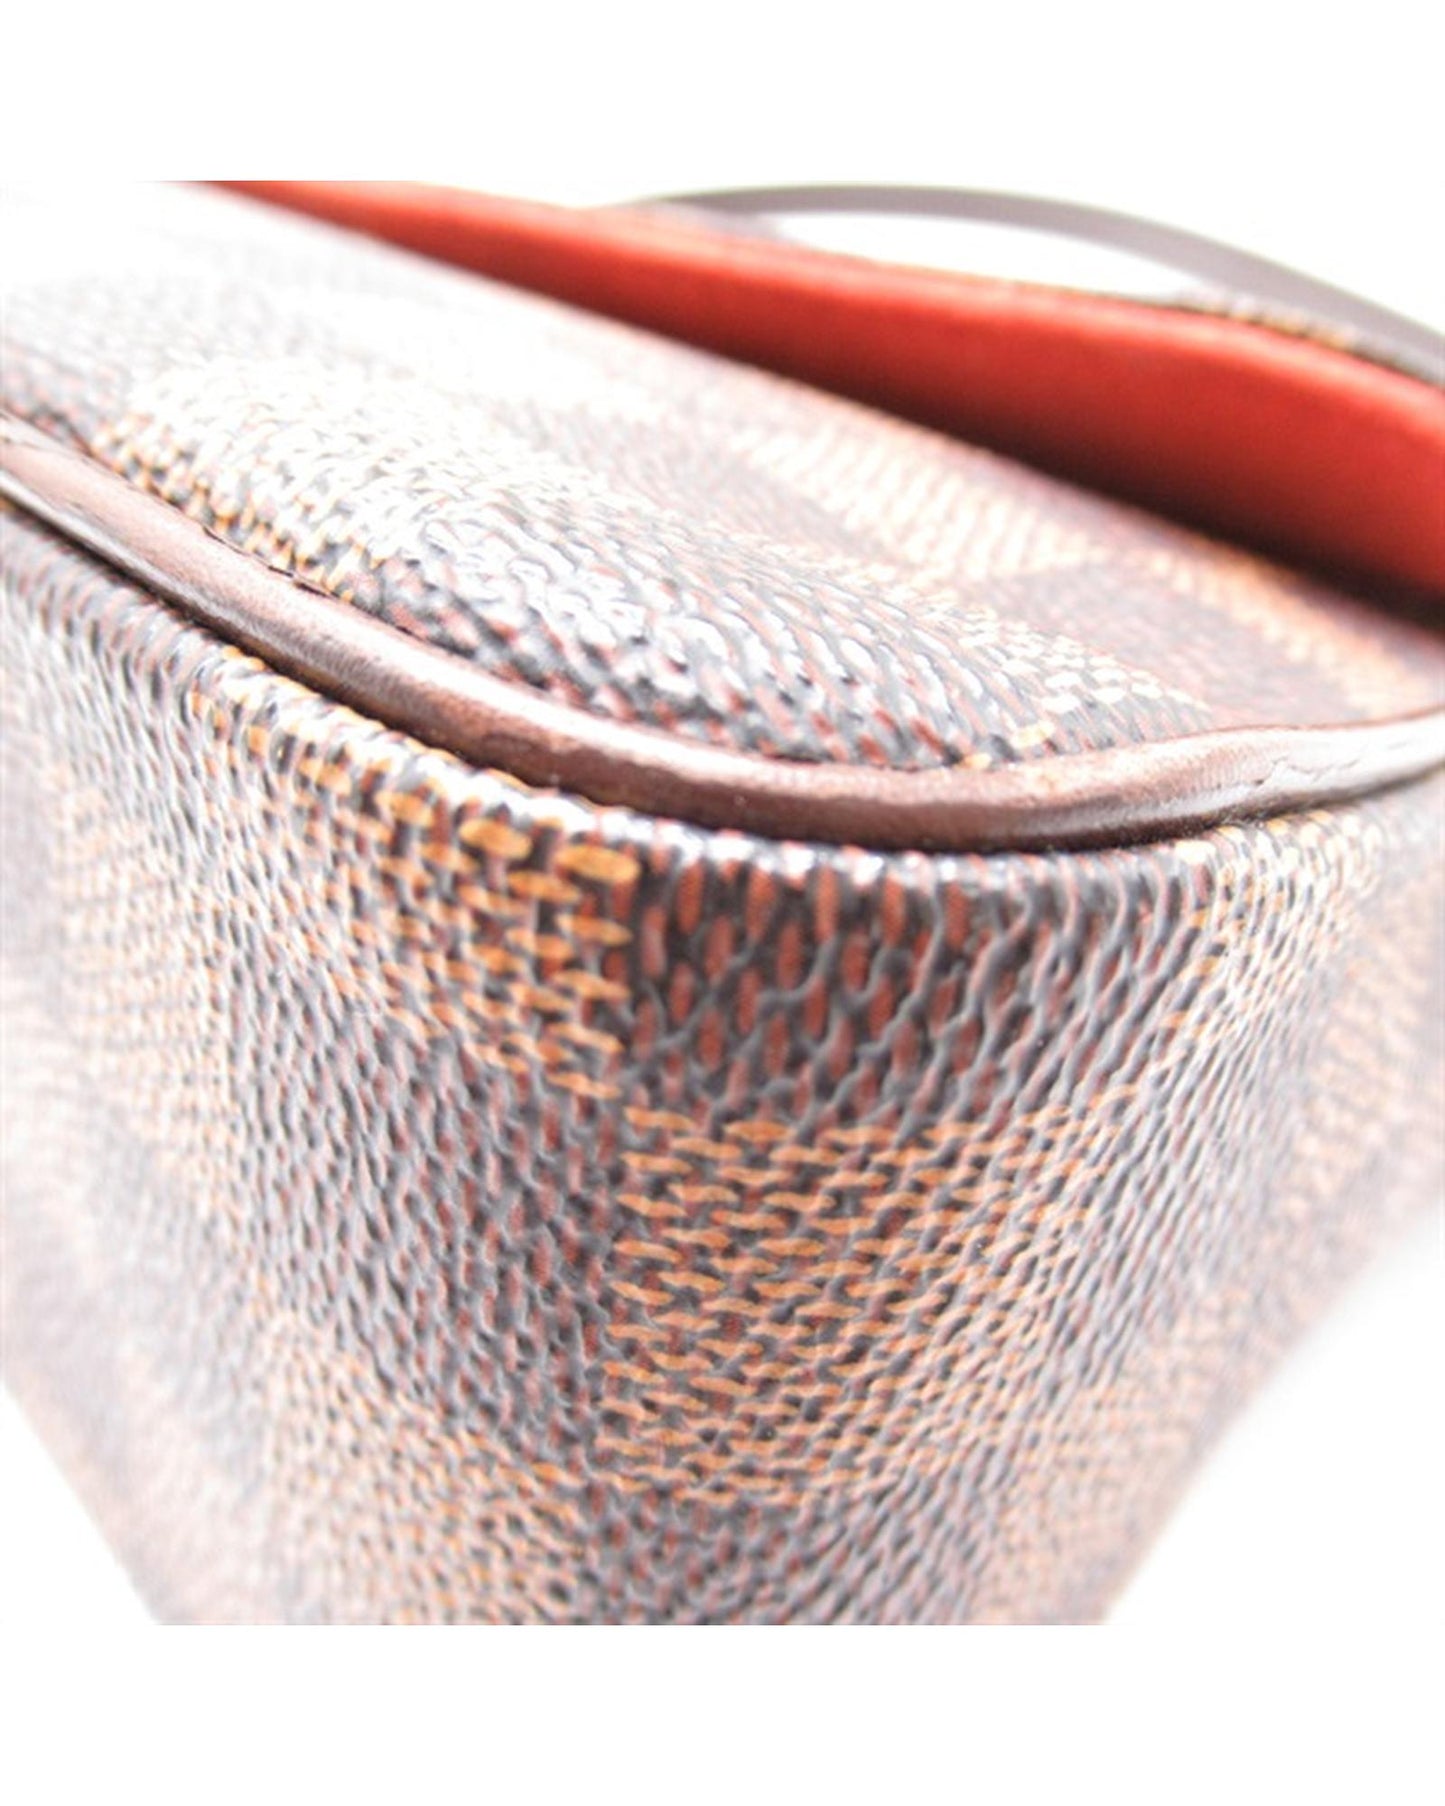 Louis Vuitton Women's Brown Damier Ebene Recoleta Bag in Excellent Condition in Brown